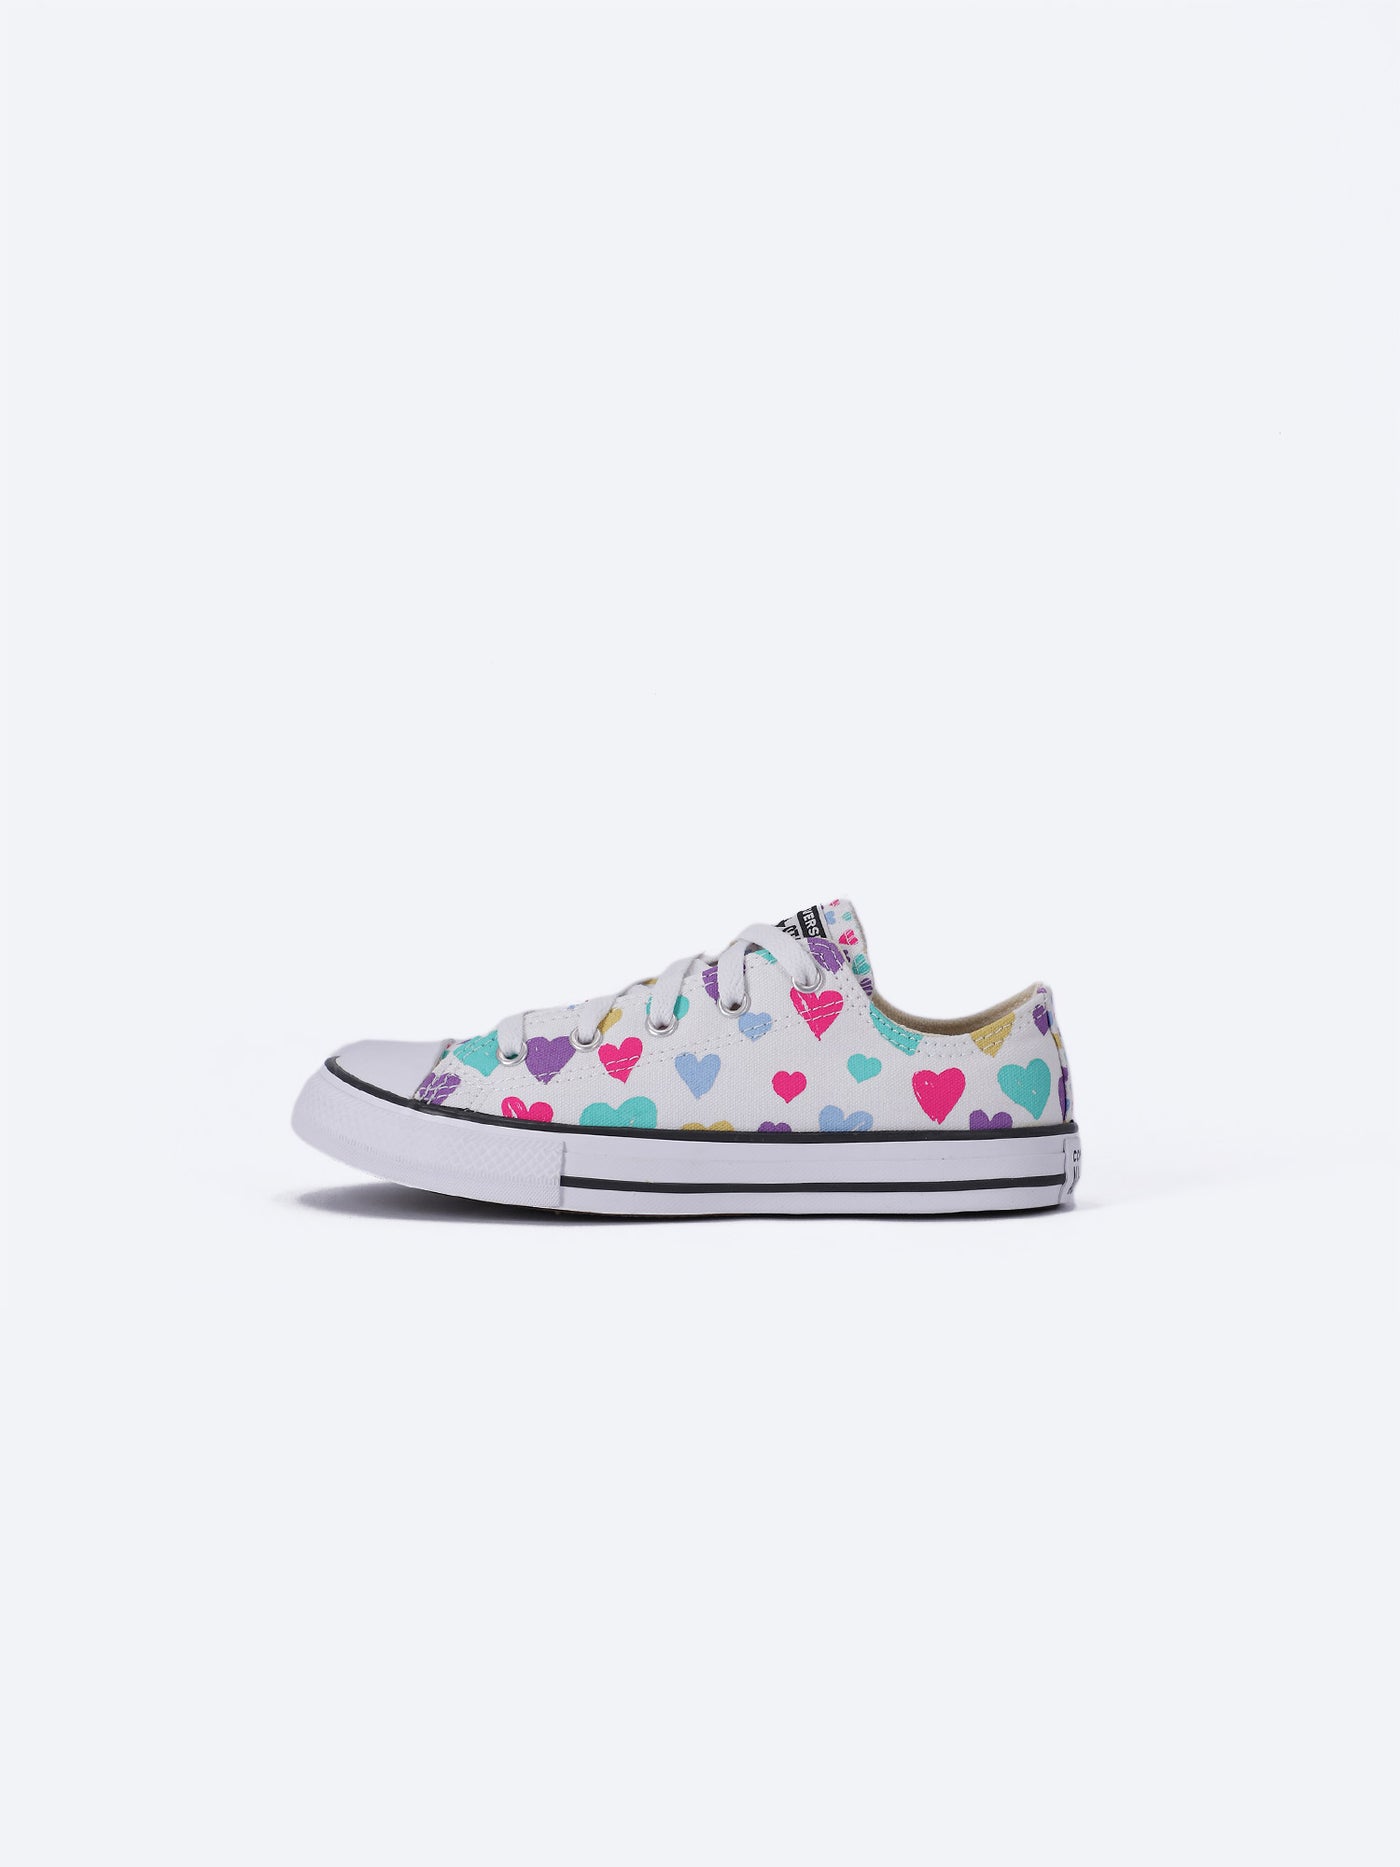 Converse Infants Girls Always On Hearts Sneaker Shoes